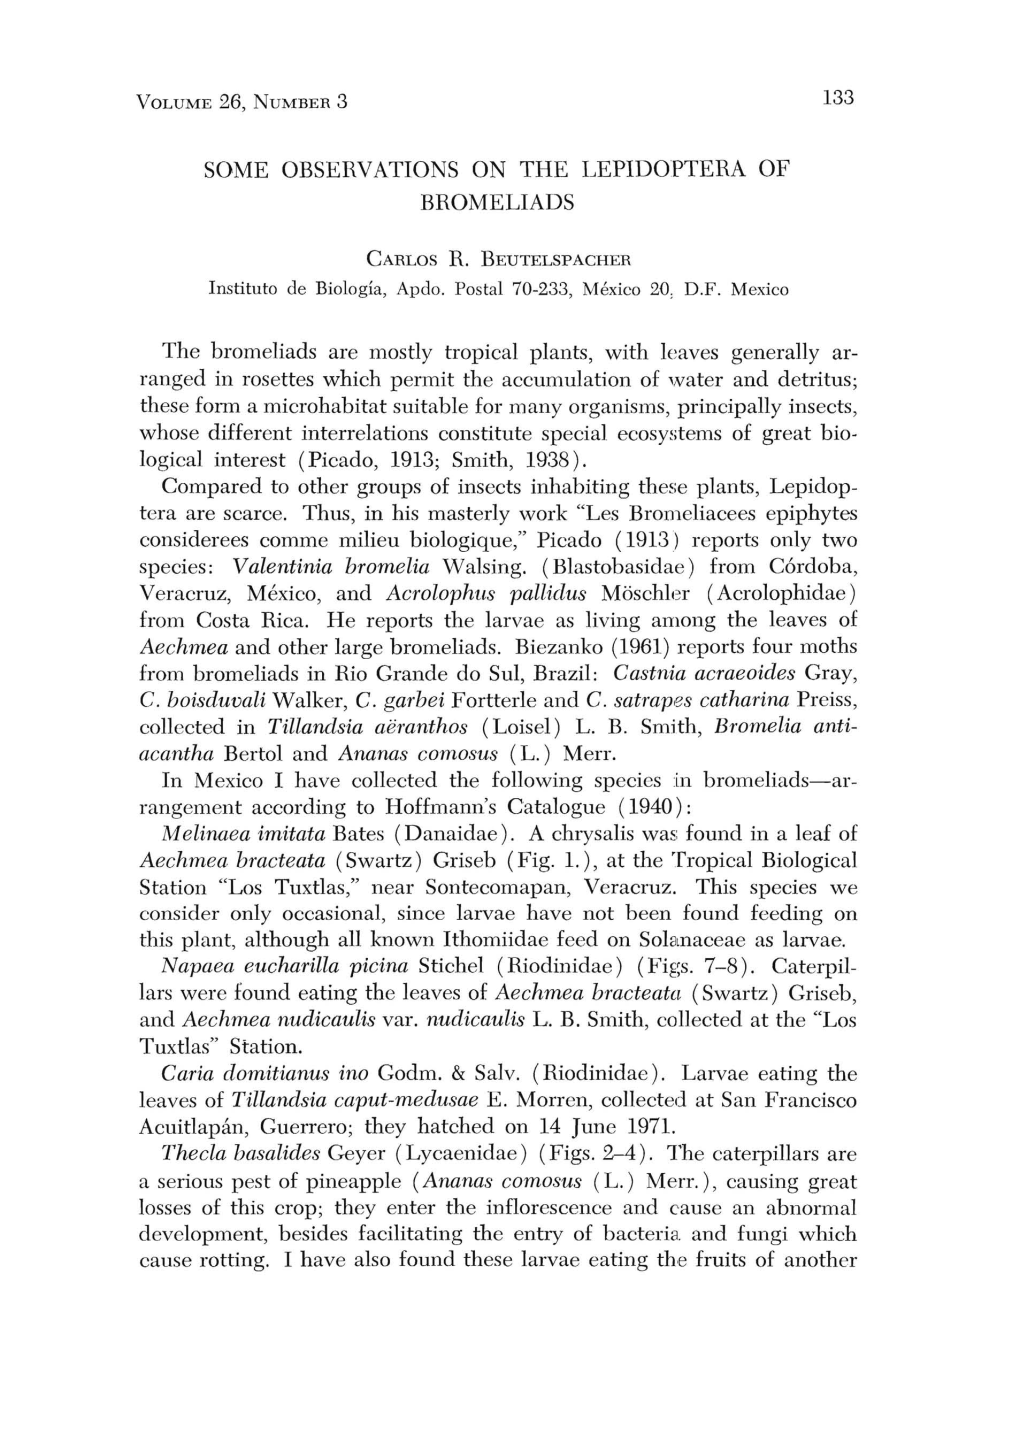 C. Boisduvali Walker, C. Garbei Fortterle and C. Satrapes Eatharina Prciss, Collected in Tillandsia Aeranthos (Loisel) L